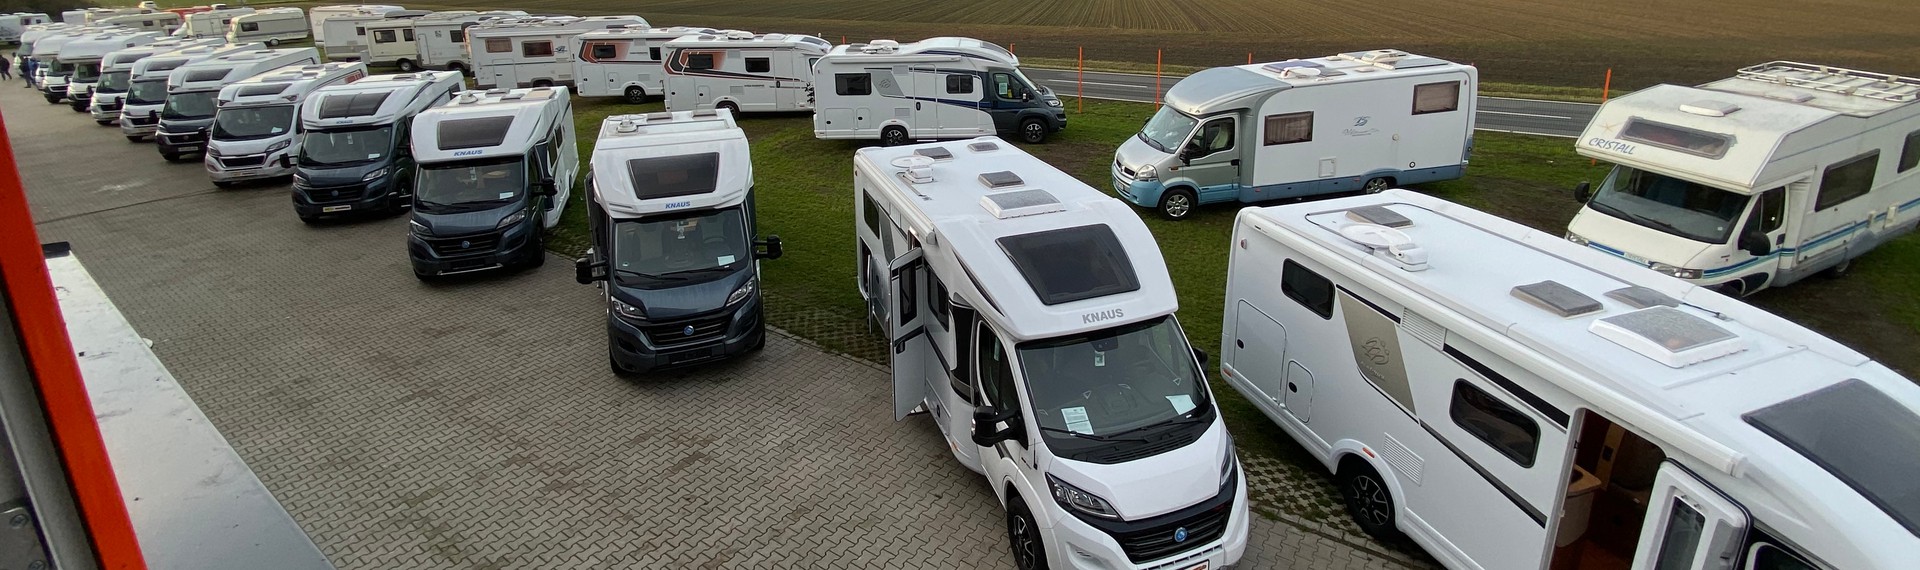 Sat-Anlage Wohnmobil, Wohnwagen, Campingbus